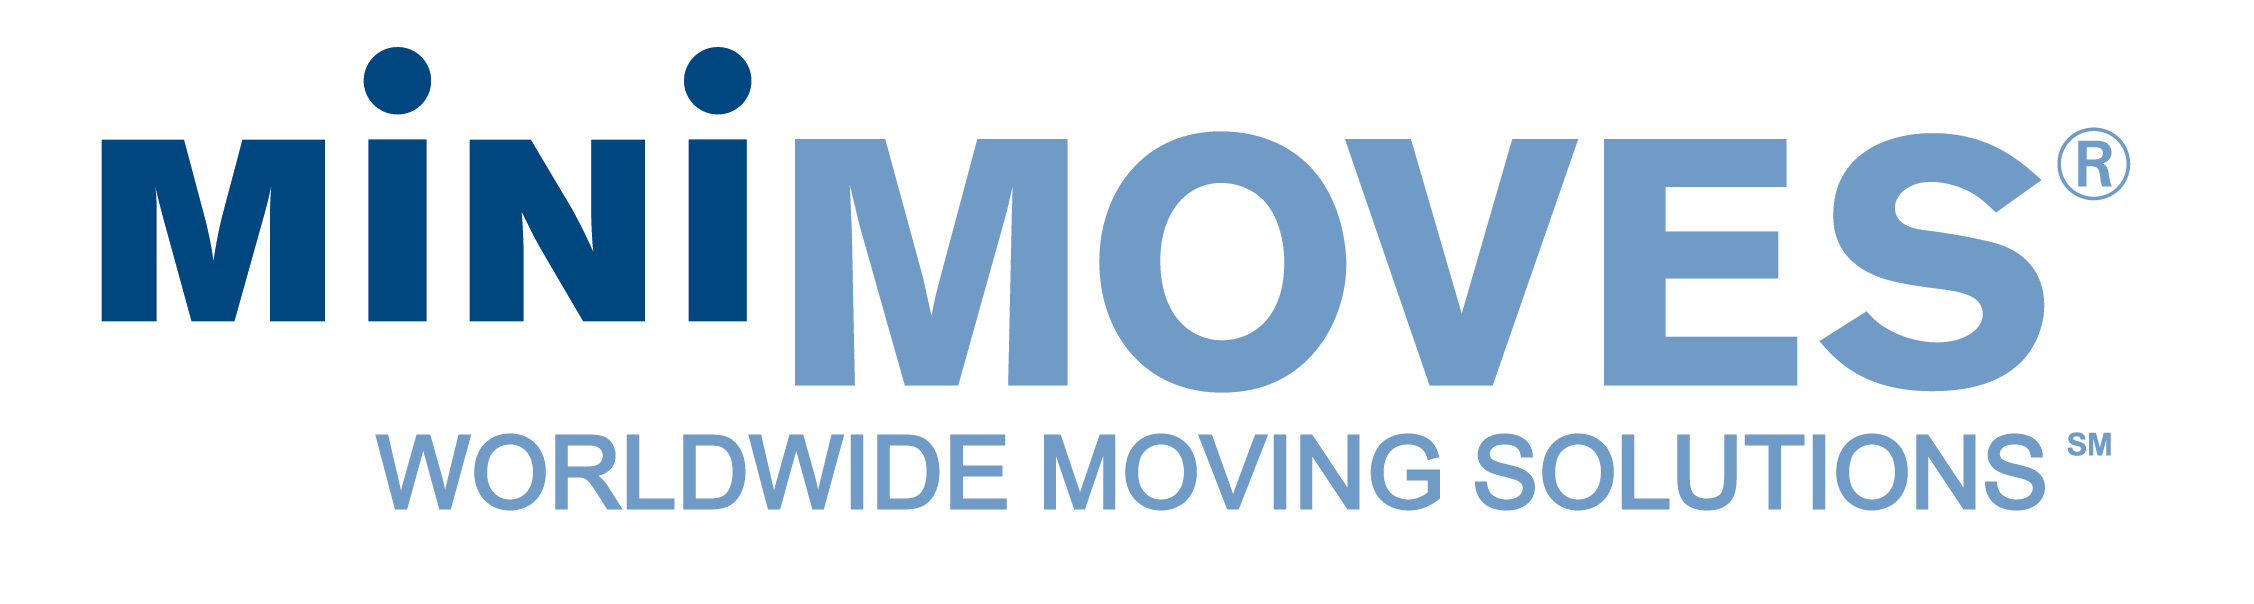 MiniMoves Worldwide Moving Solutions logo